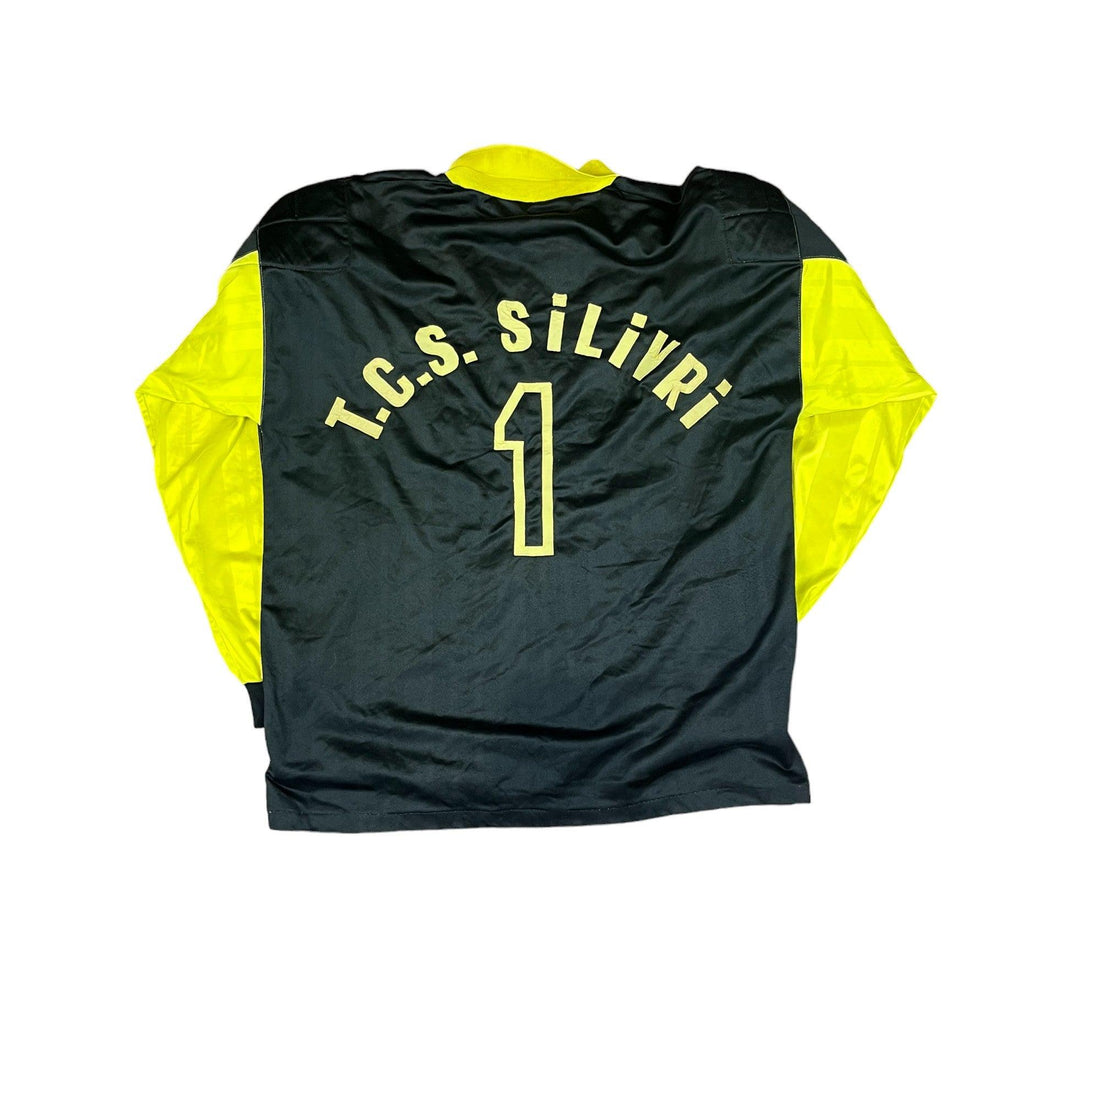 Vintage 90s Black + Yellow Turkey Goalkeeper Tee - Medium - The Streetwear Studio